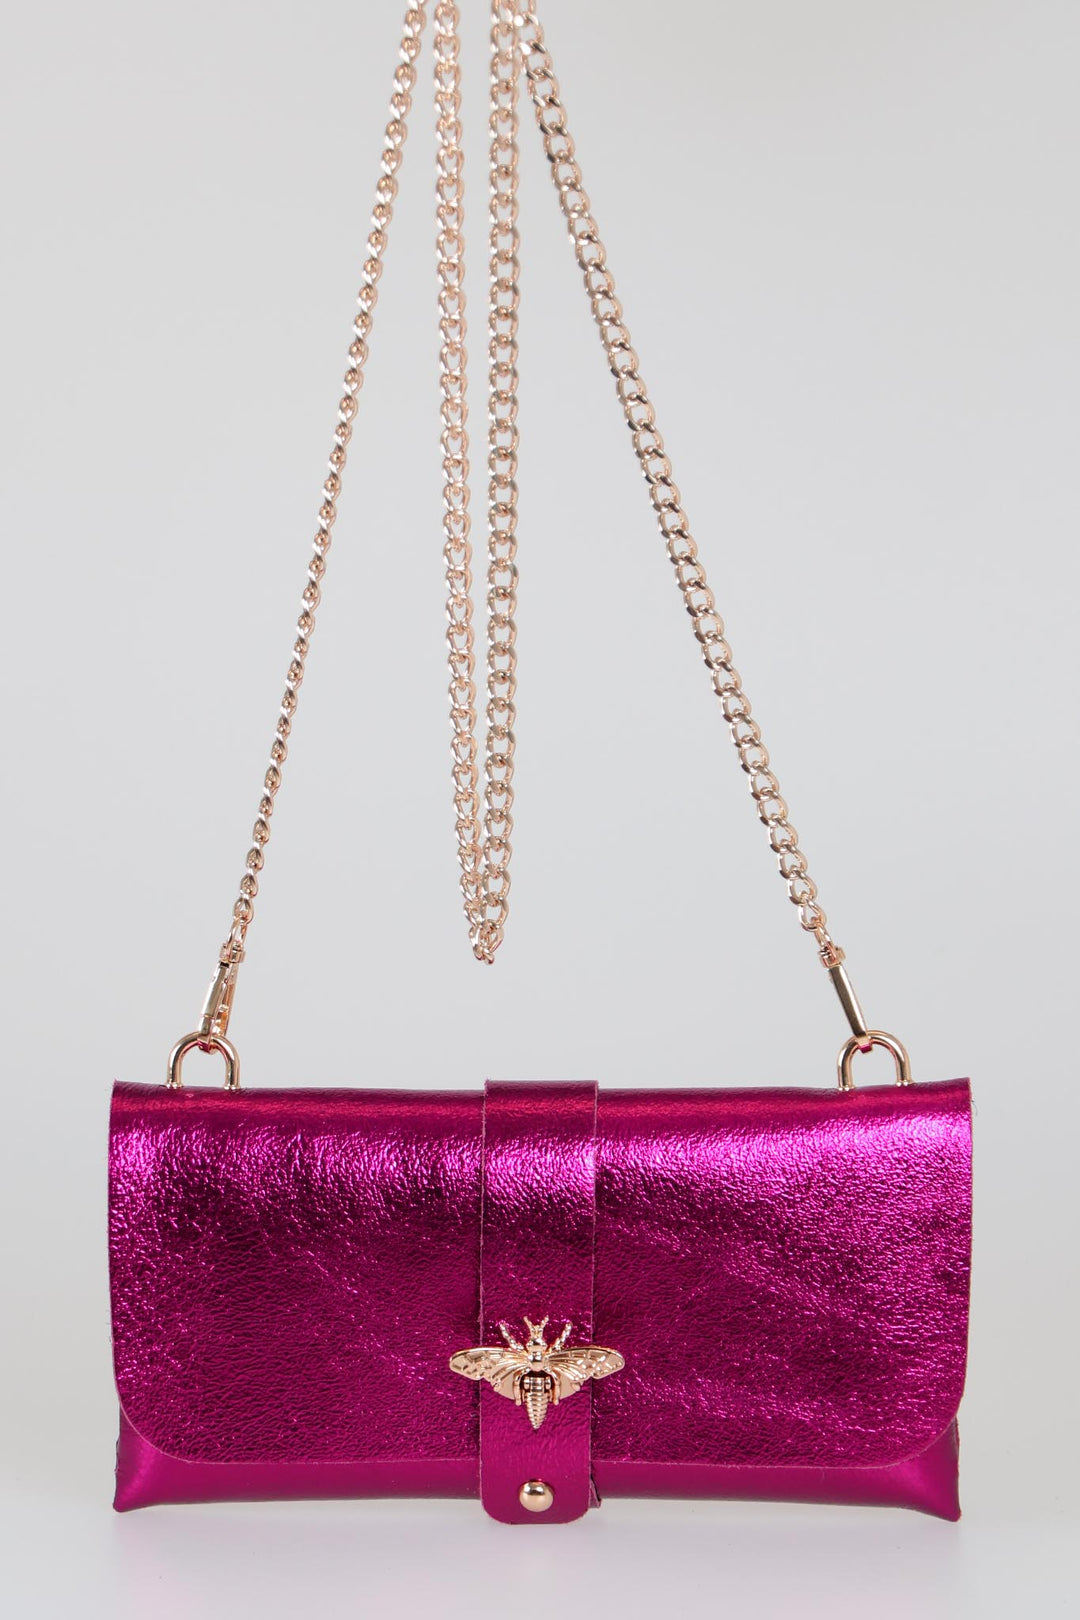 Metallic Raspberry Bee Emblem Genuine Italian Leather Clutch Bag with Gold Chain Strap